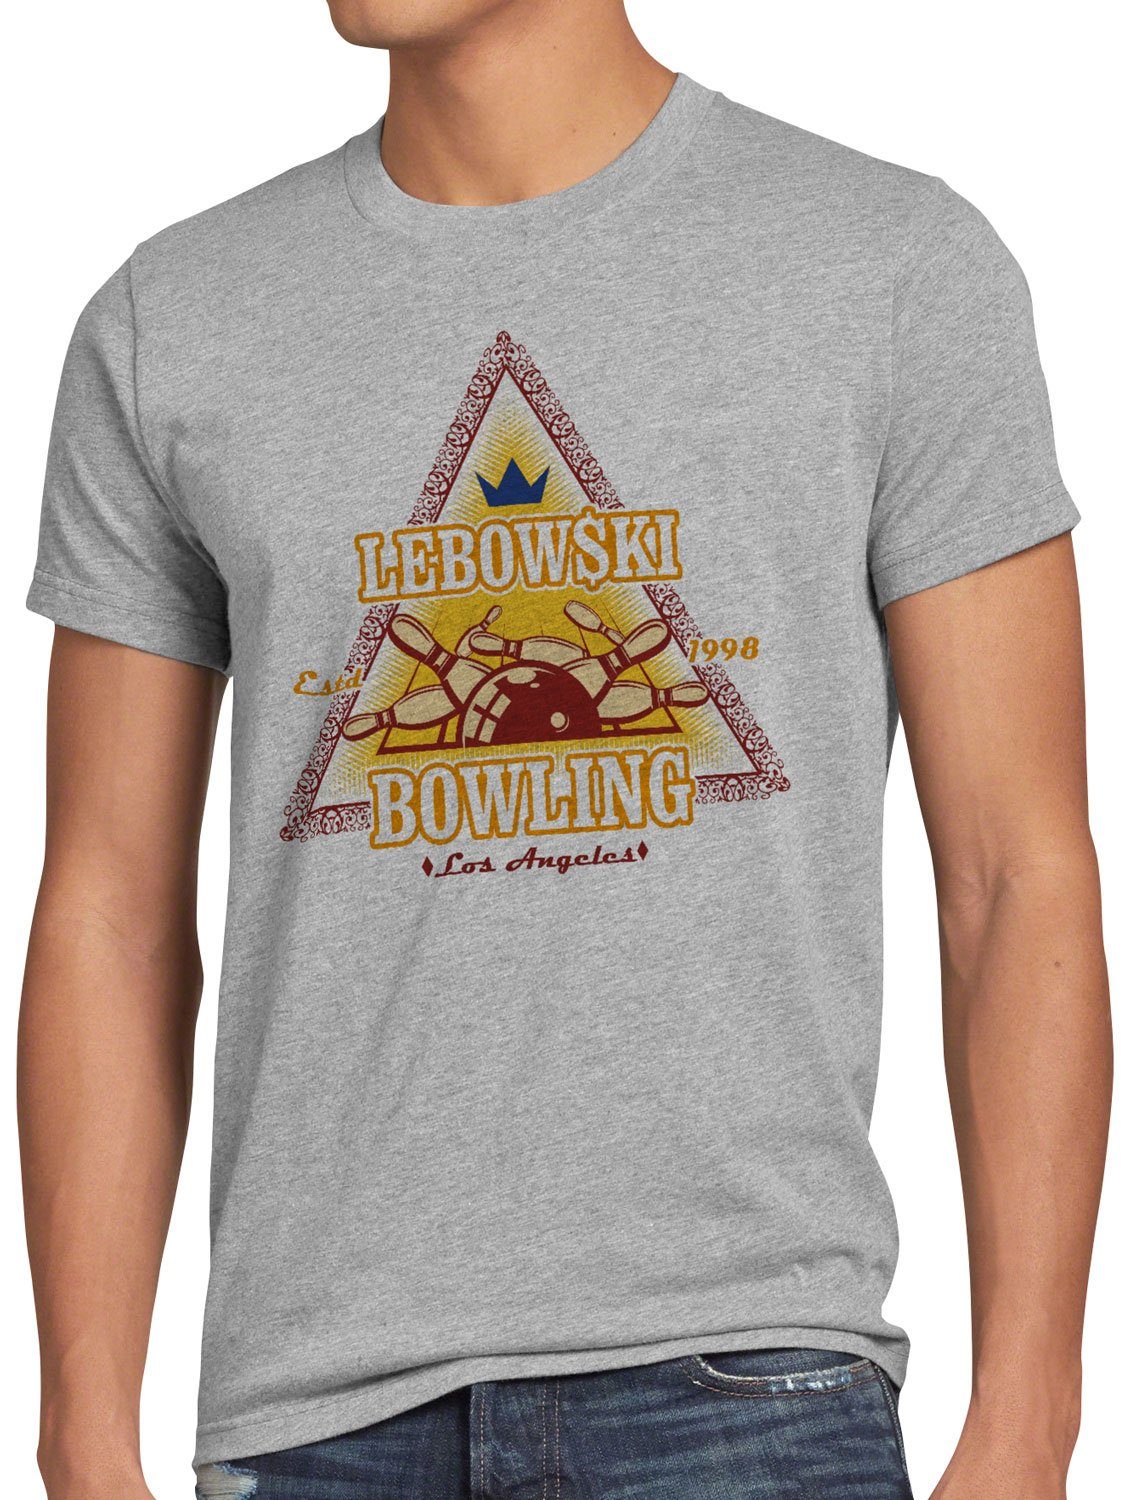 Großhandelspreis von style3 Print-Shirt Herren Bowler grau Lebowski T-Shirt Big Bowling Rude meliert Dude